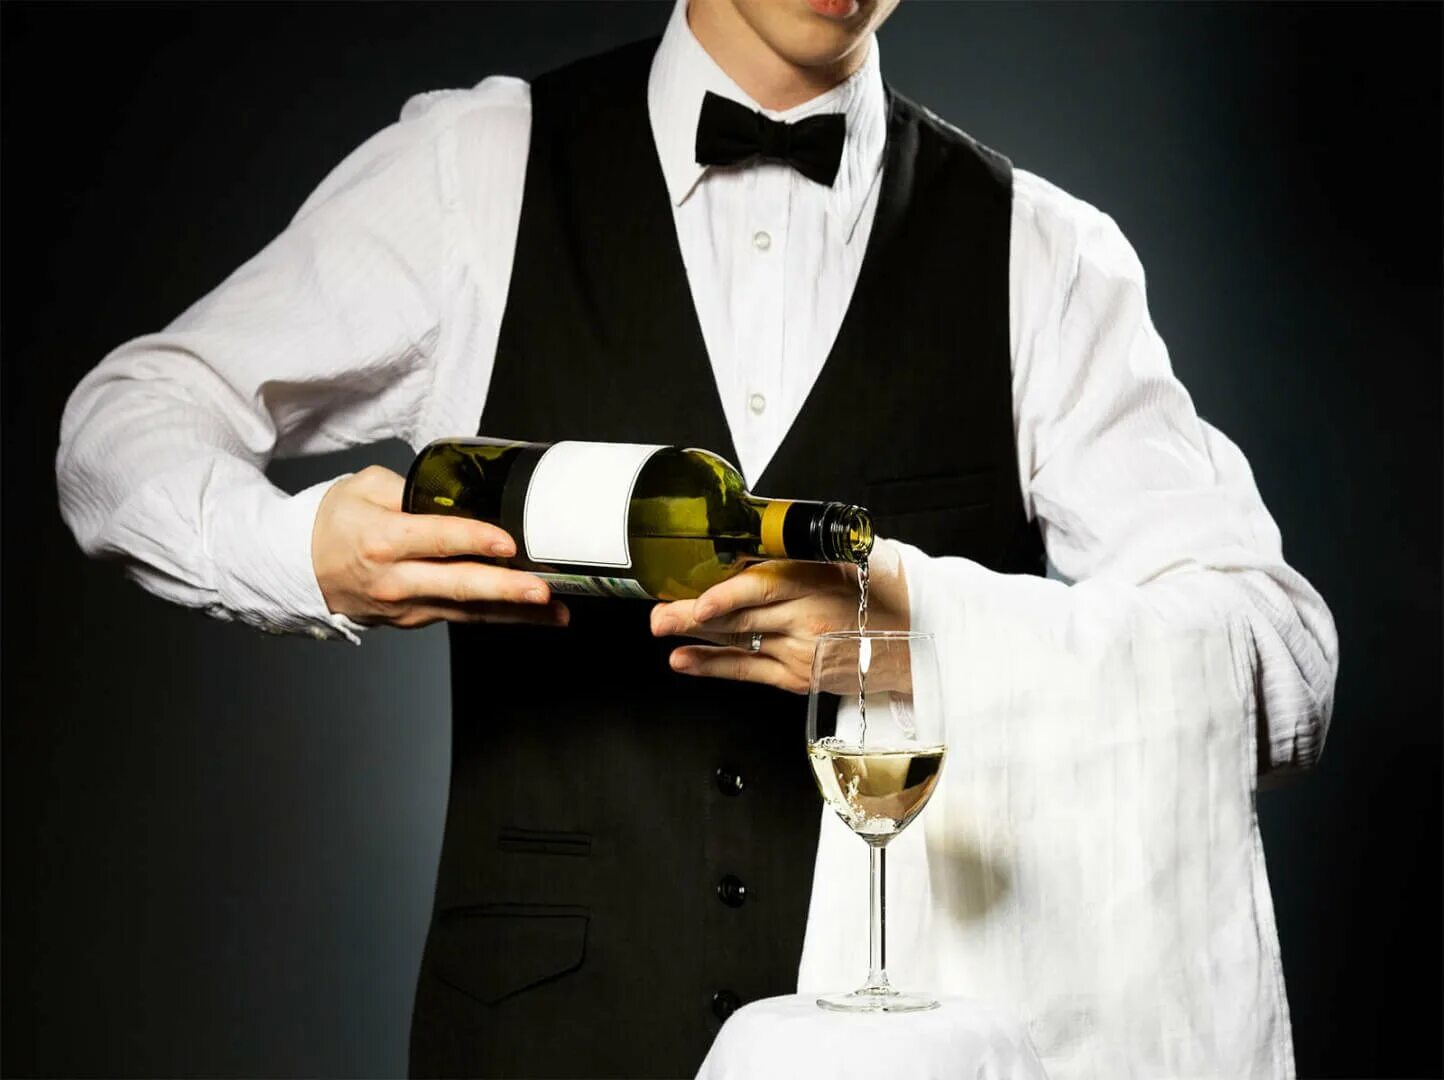 Официант. Официант бармен. Красивый официант. Официант наливает вино. Фото официанта